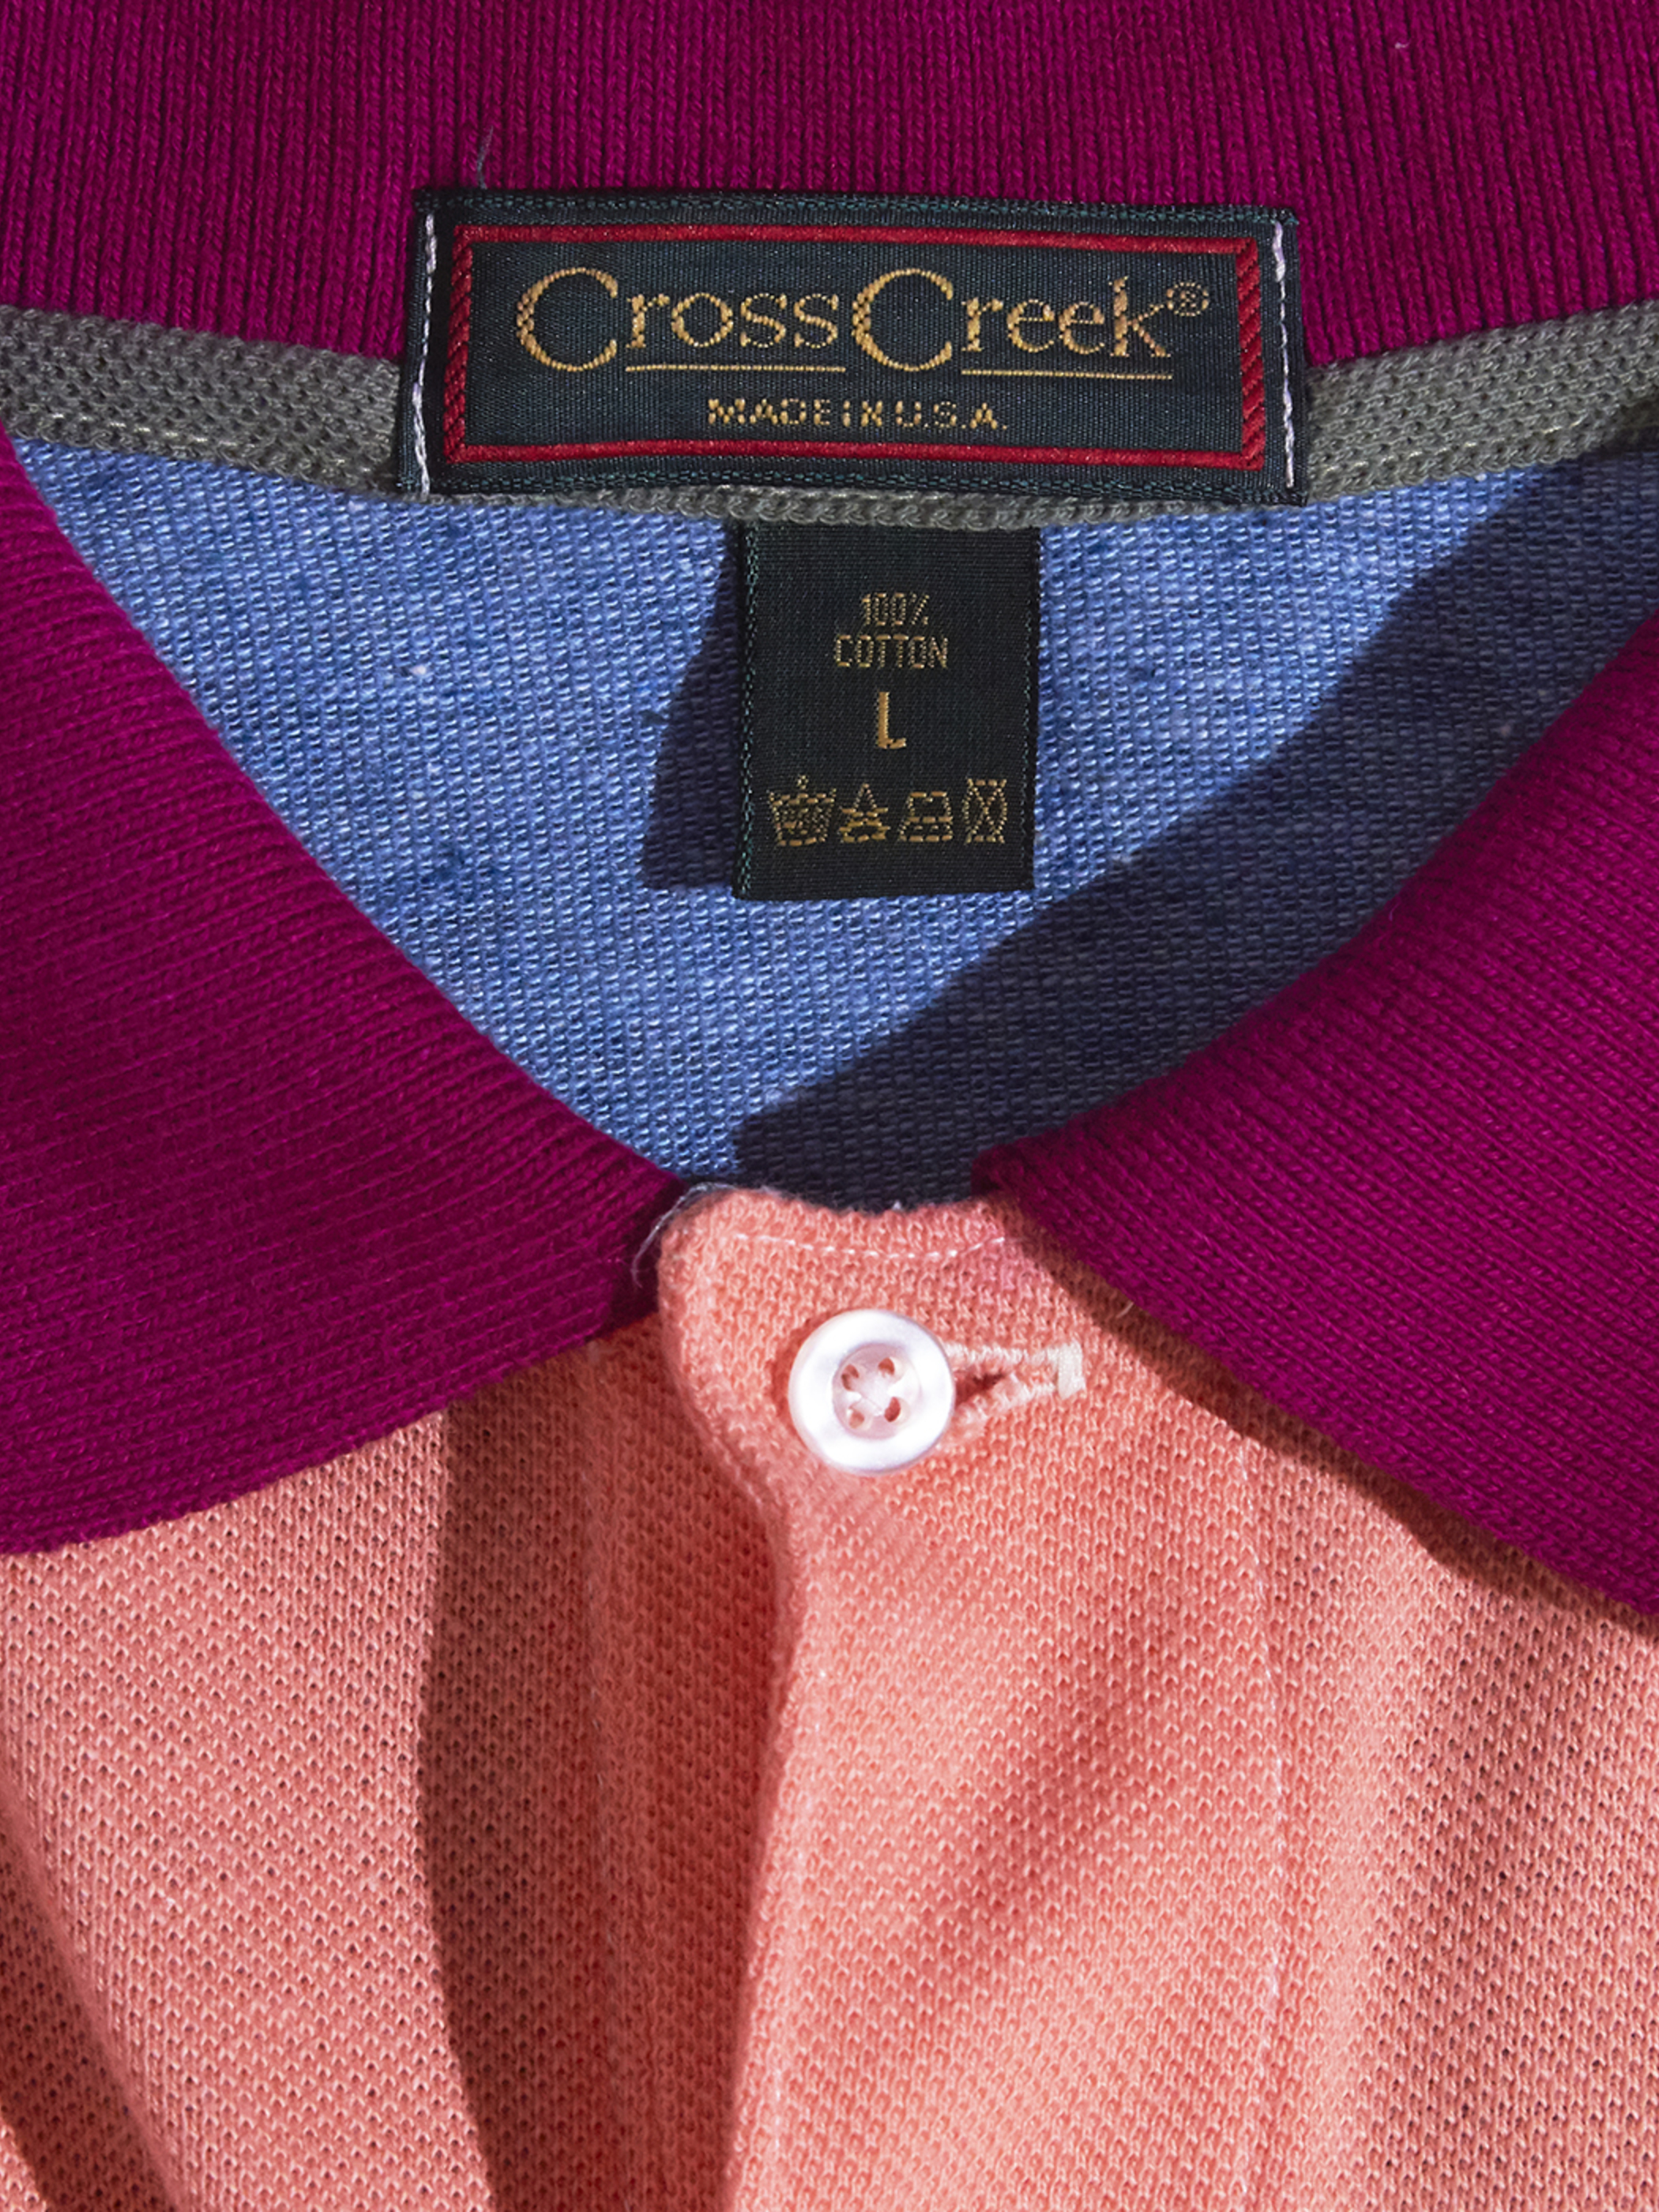 1990s "Cross Creek" crazy pattern polo shirt -CRAZY-